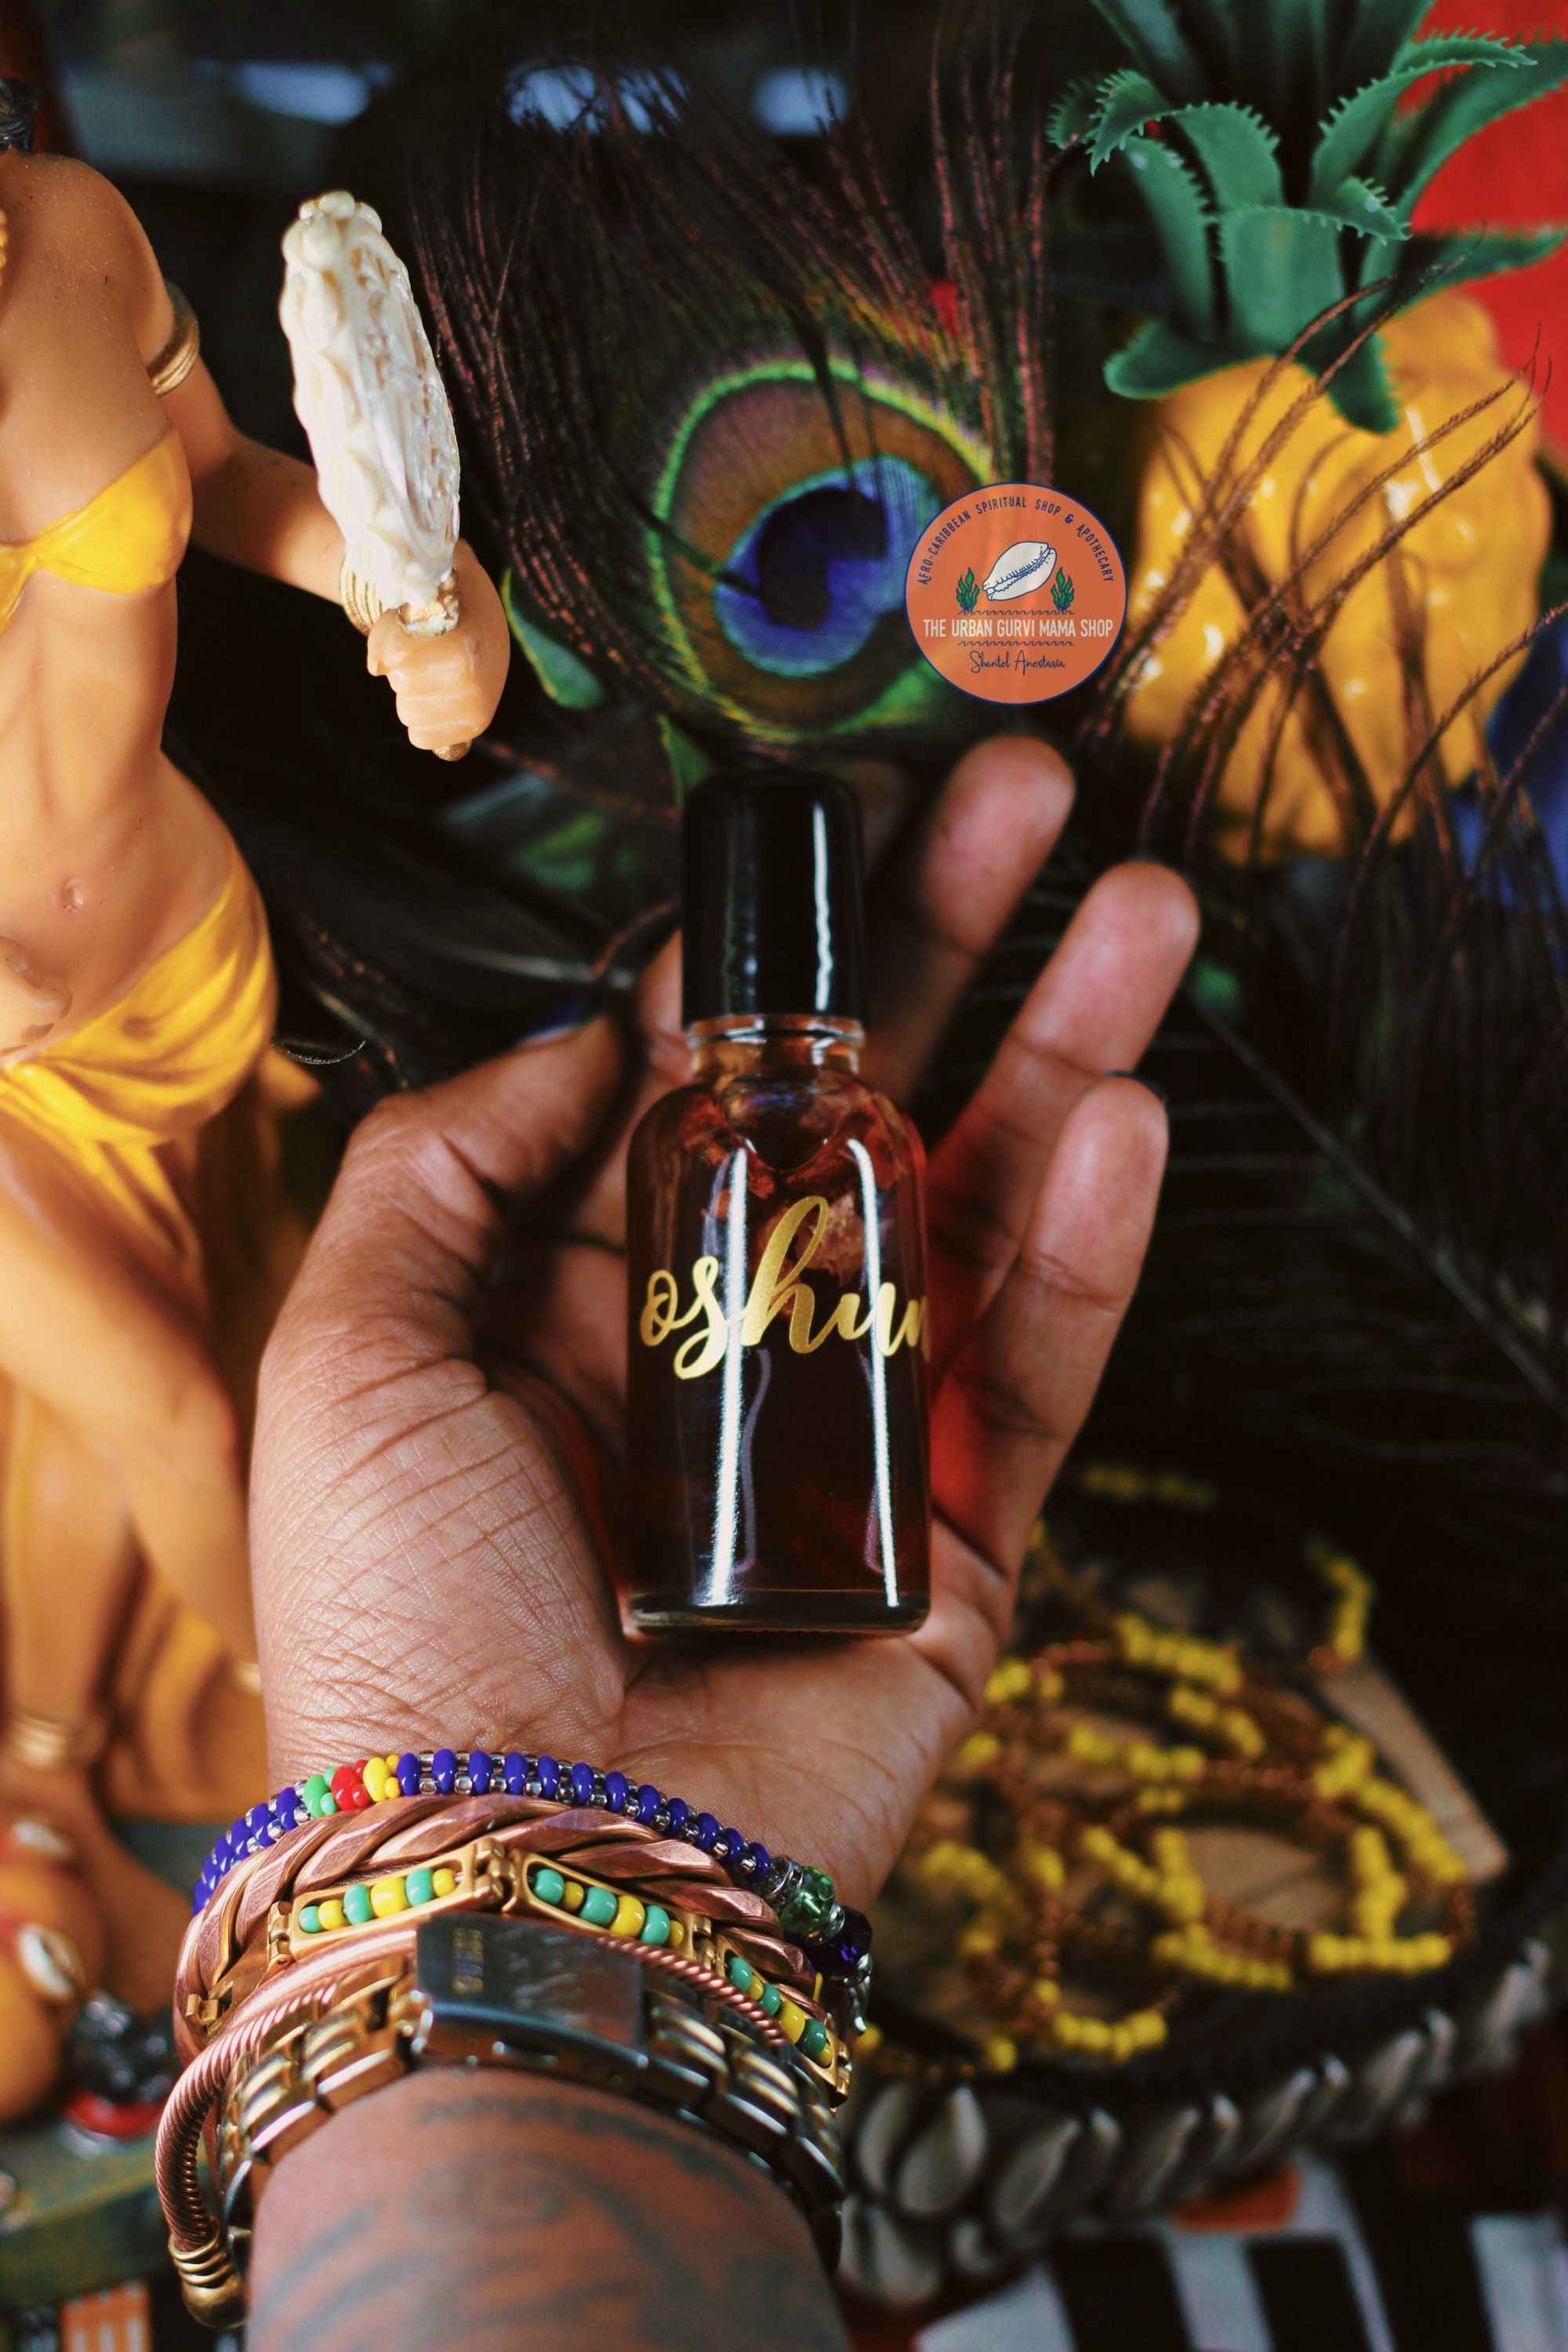  BYBLIS Seduce Her Perfume - Pheromone Spray for